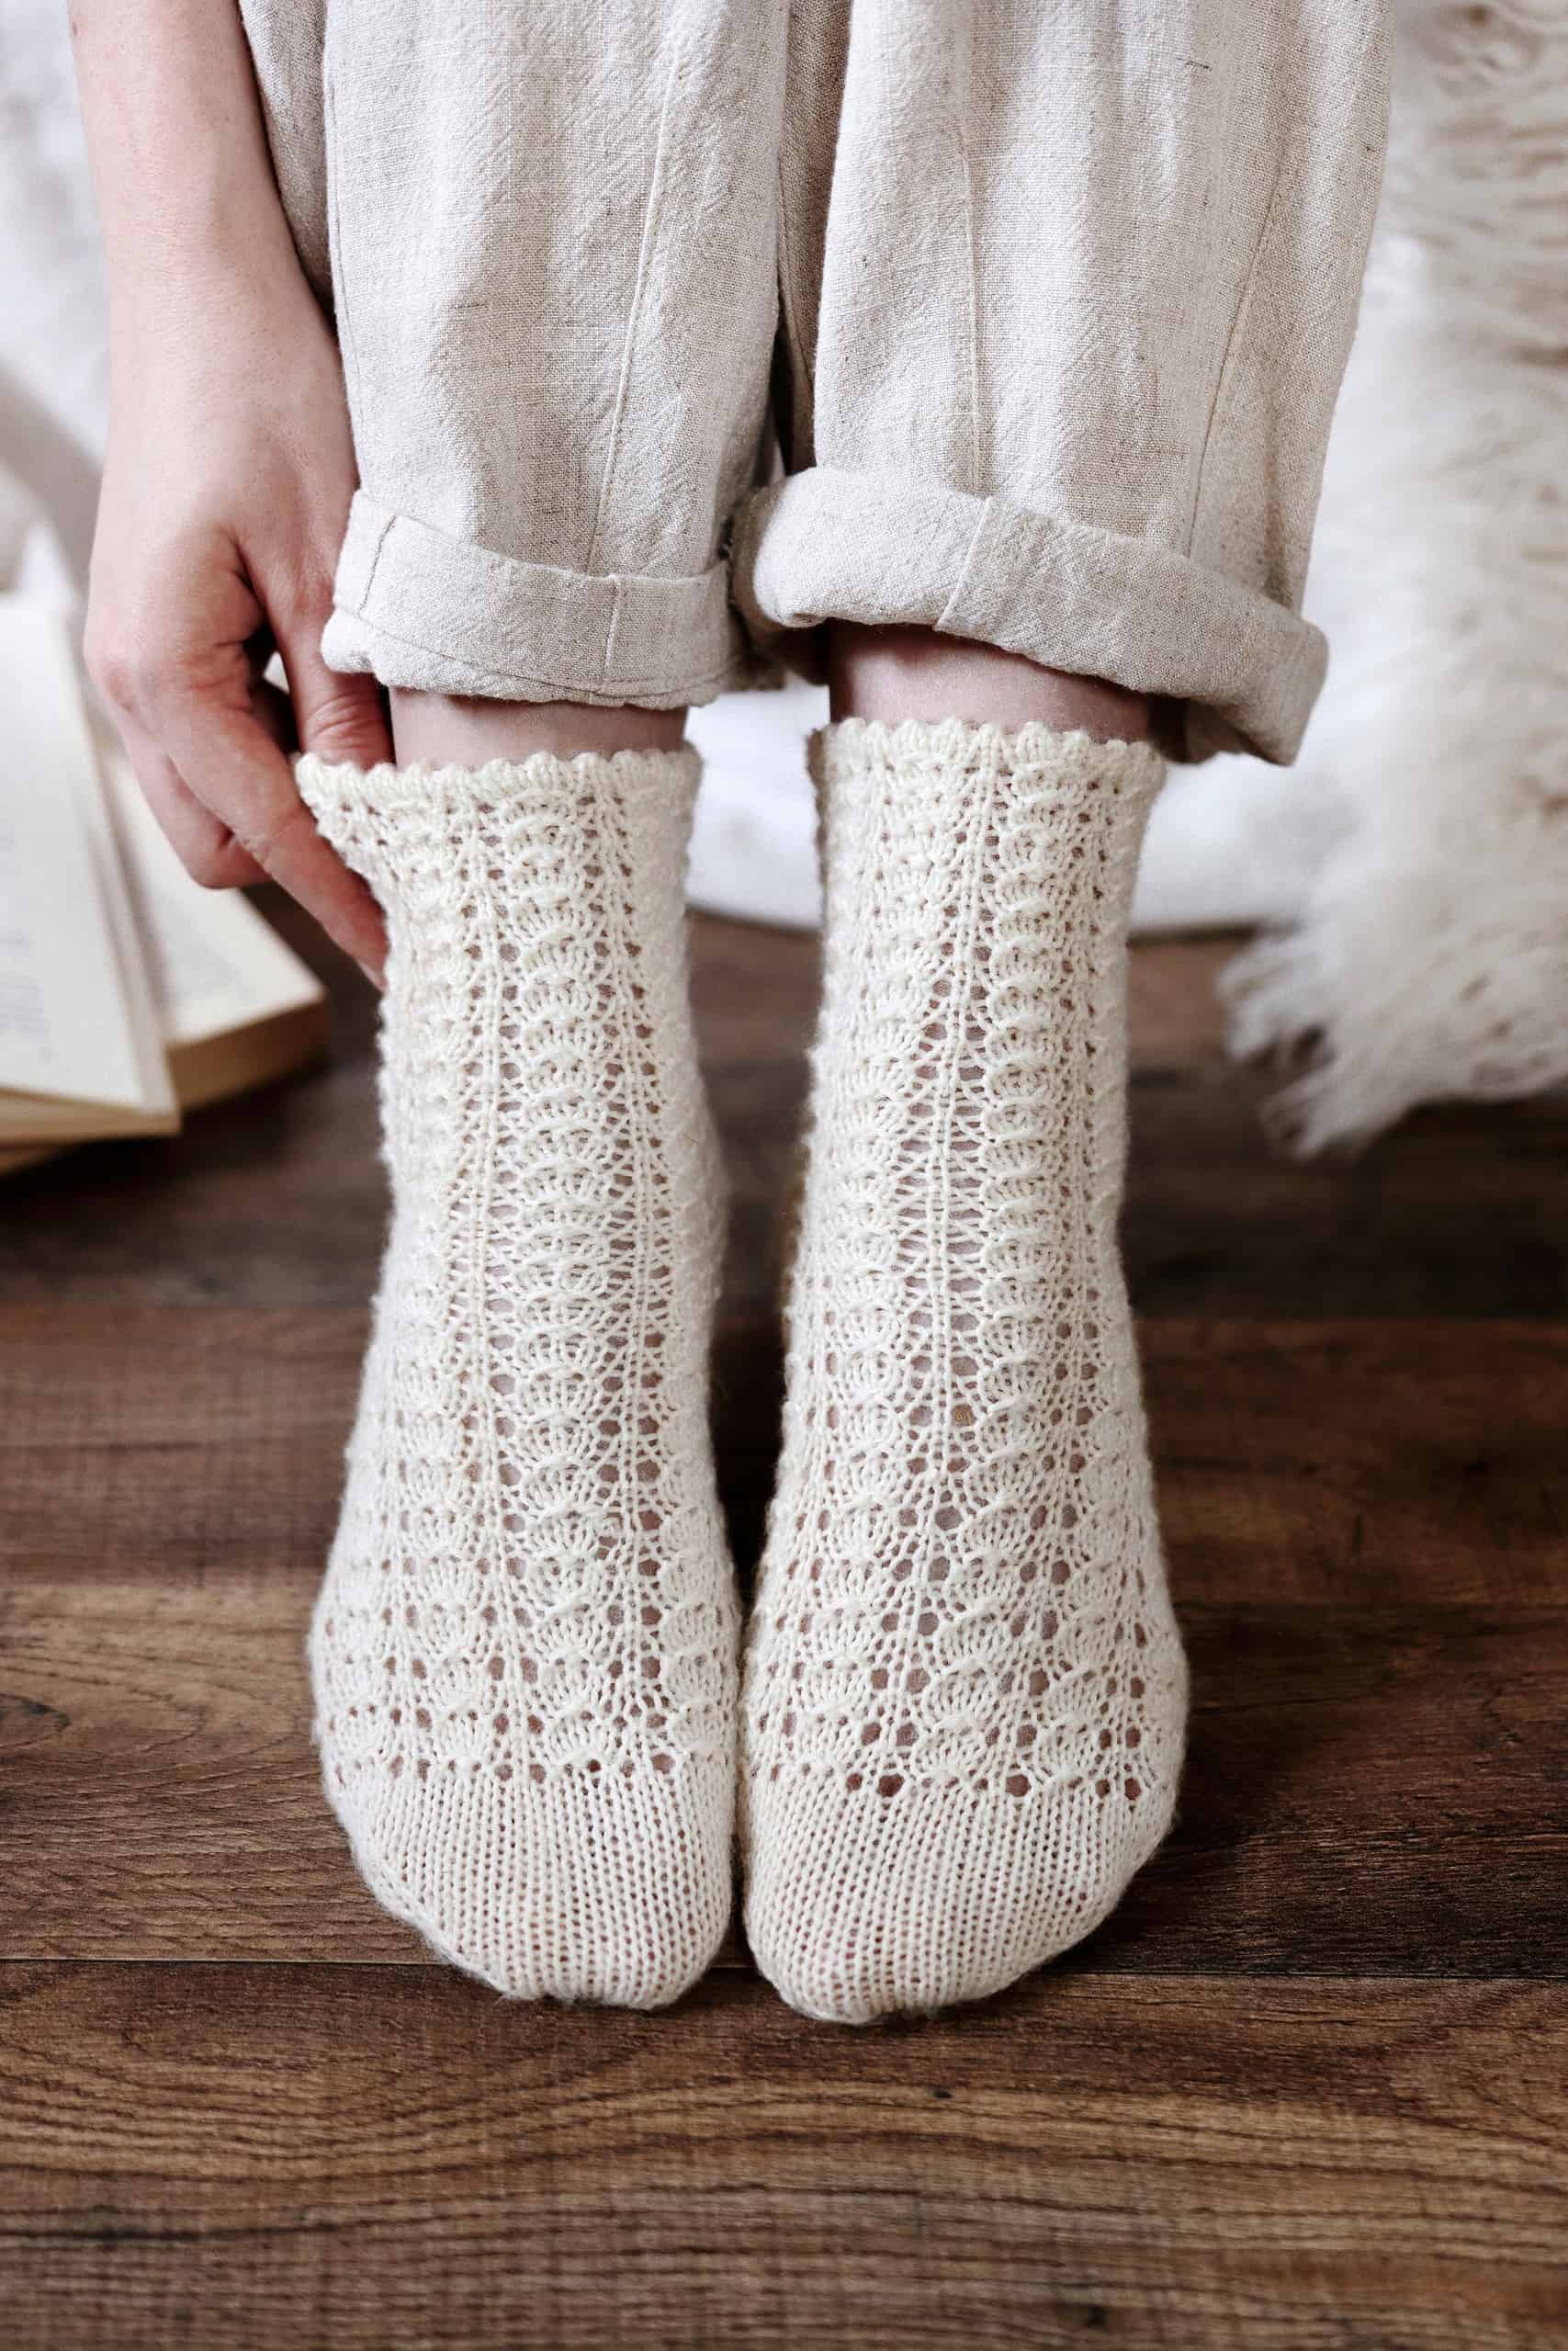 Ravelry: The Cozy Socks pattern by Darling Jadore